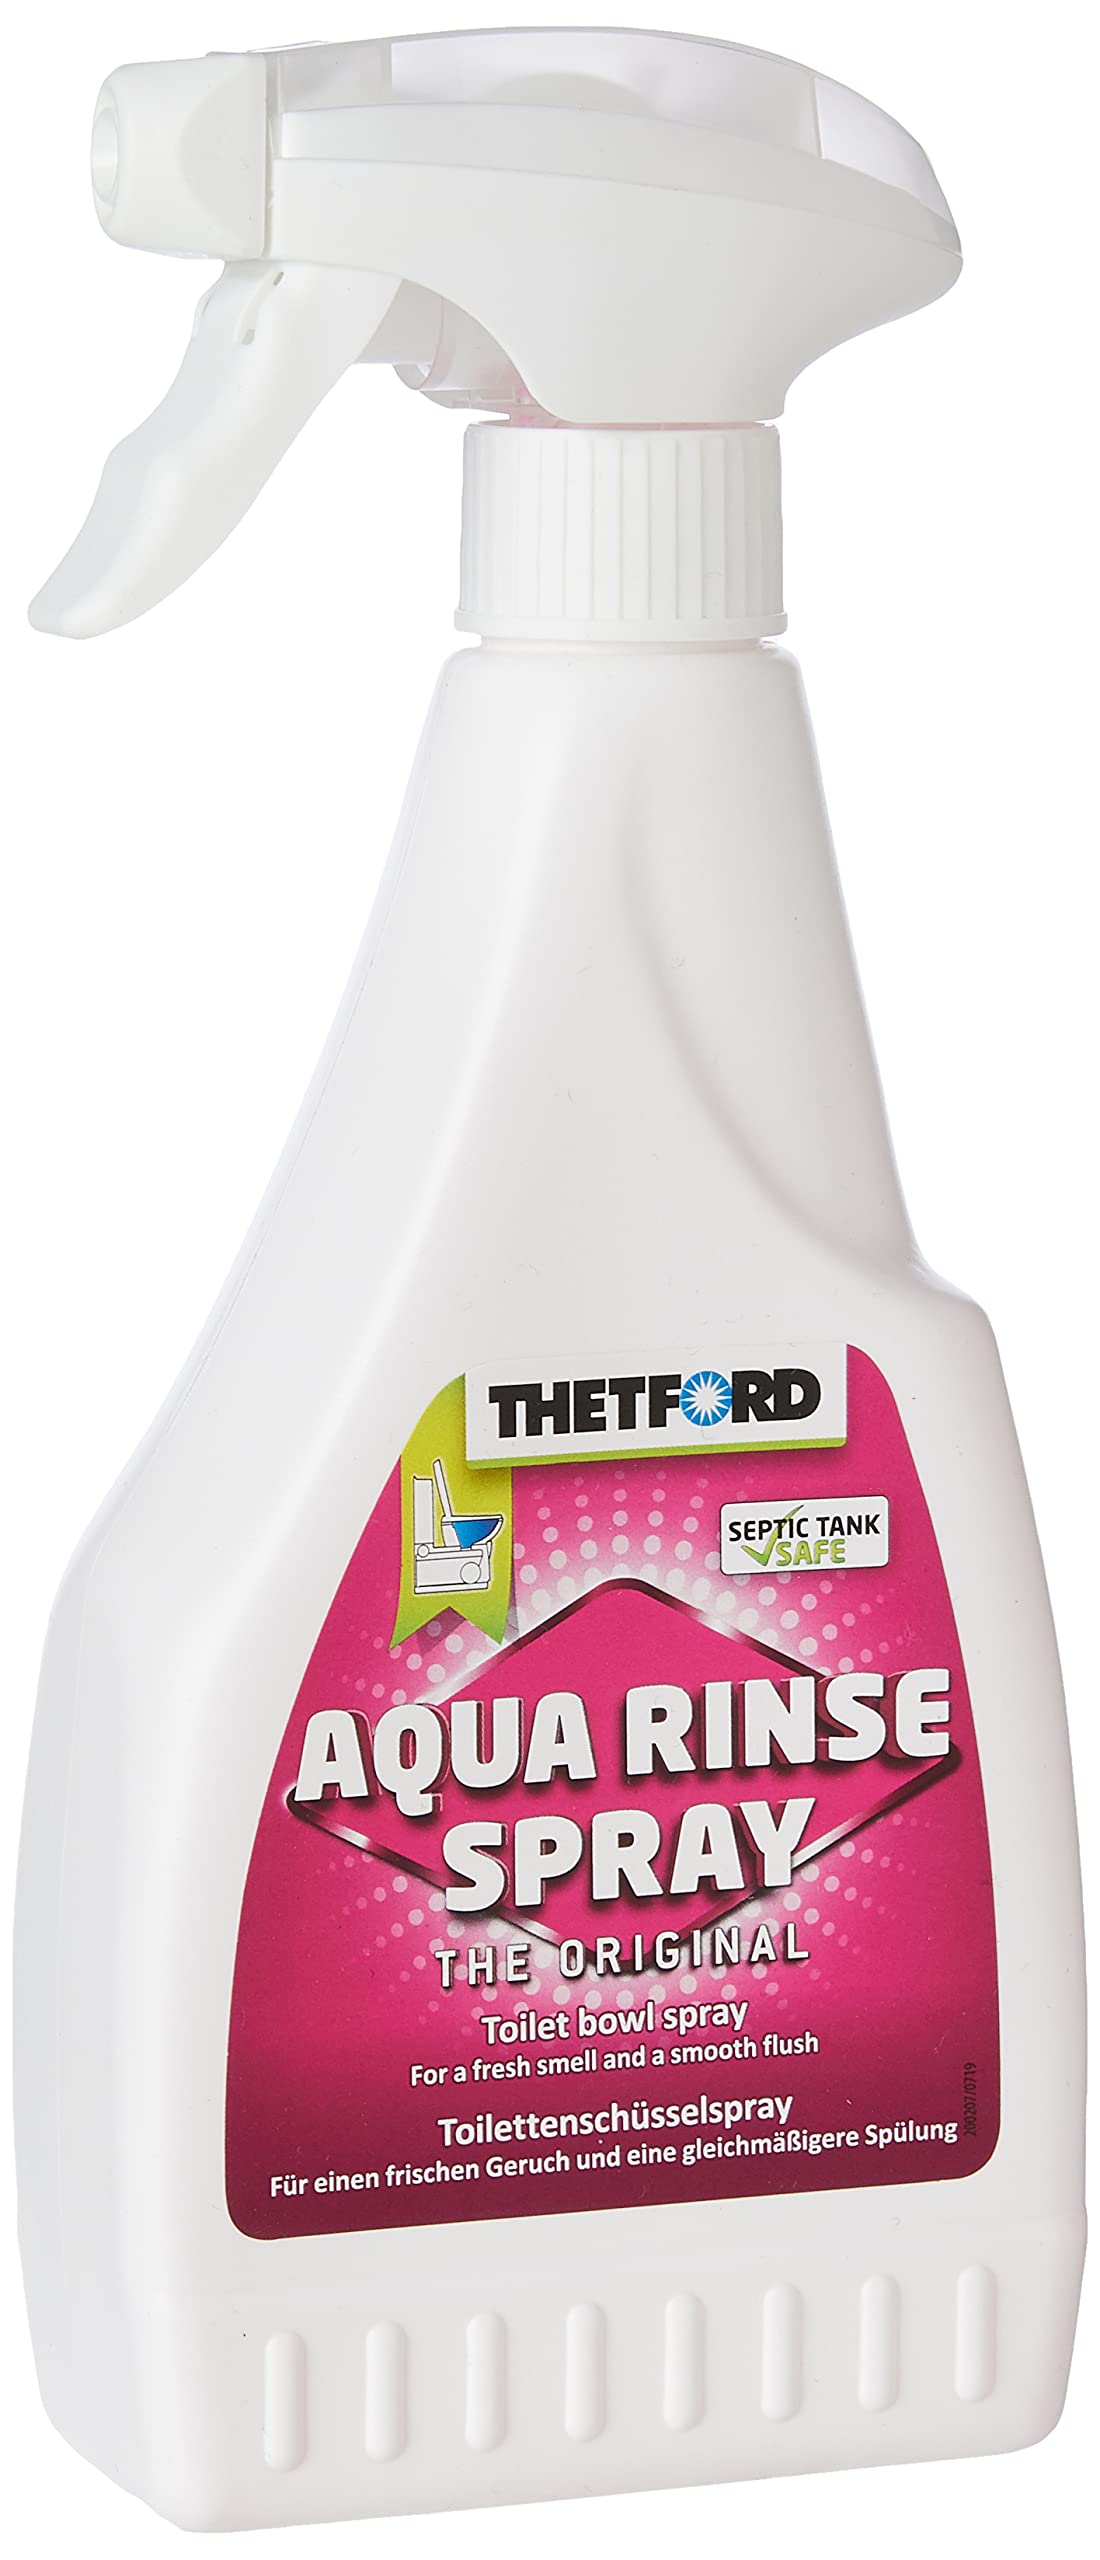 Thetford Aqua Rinse Spray 500 ml von Thetford